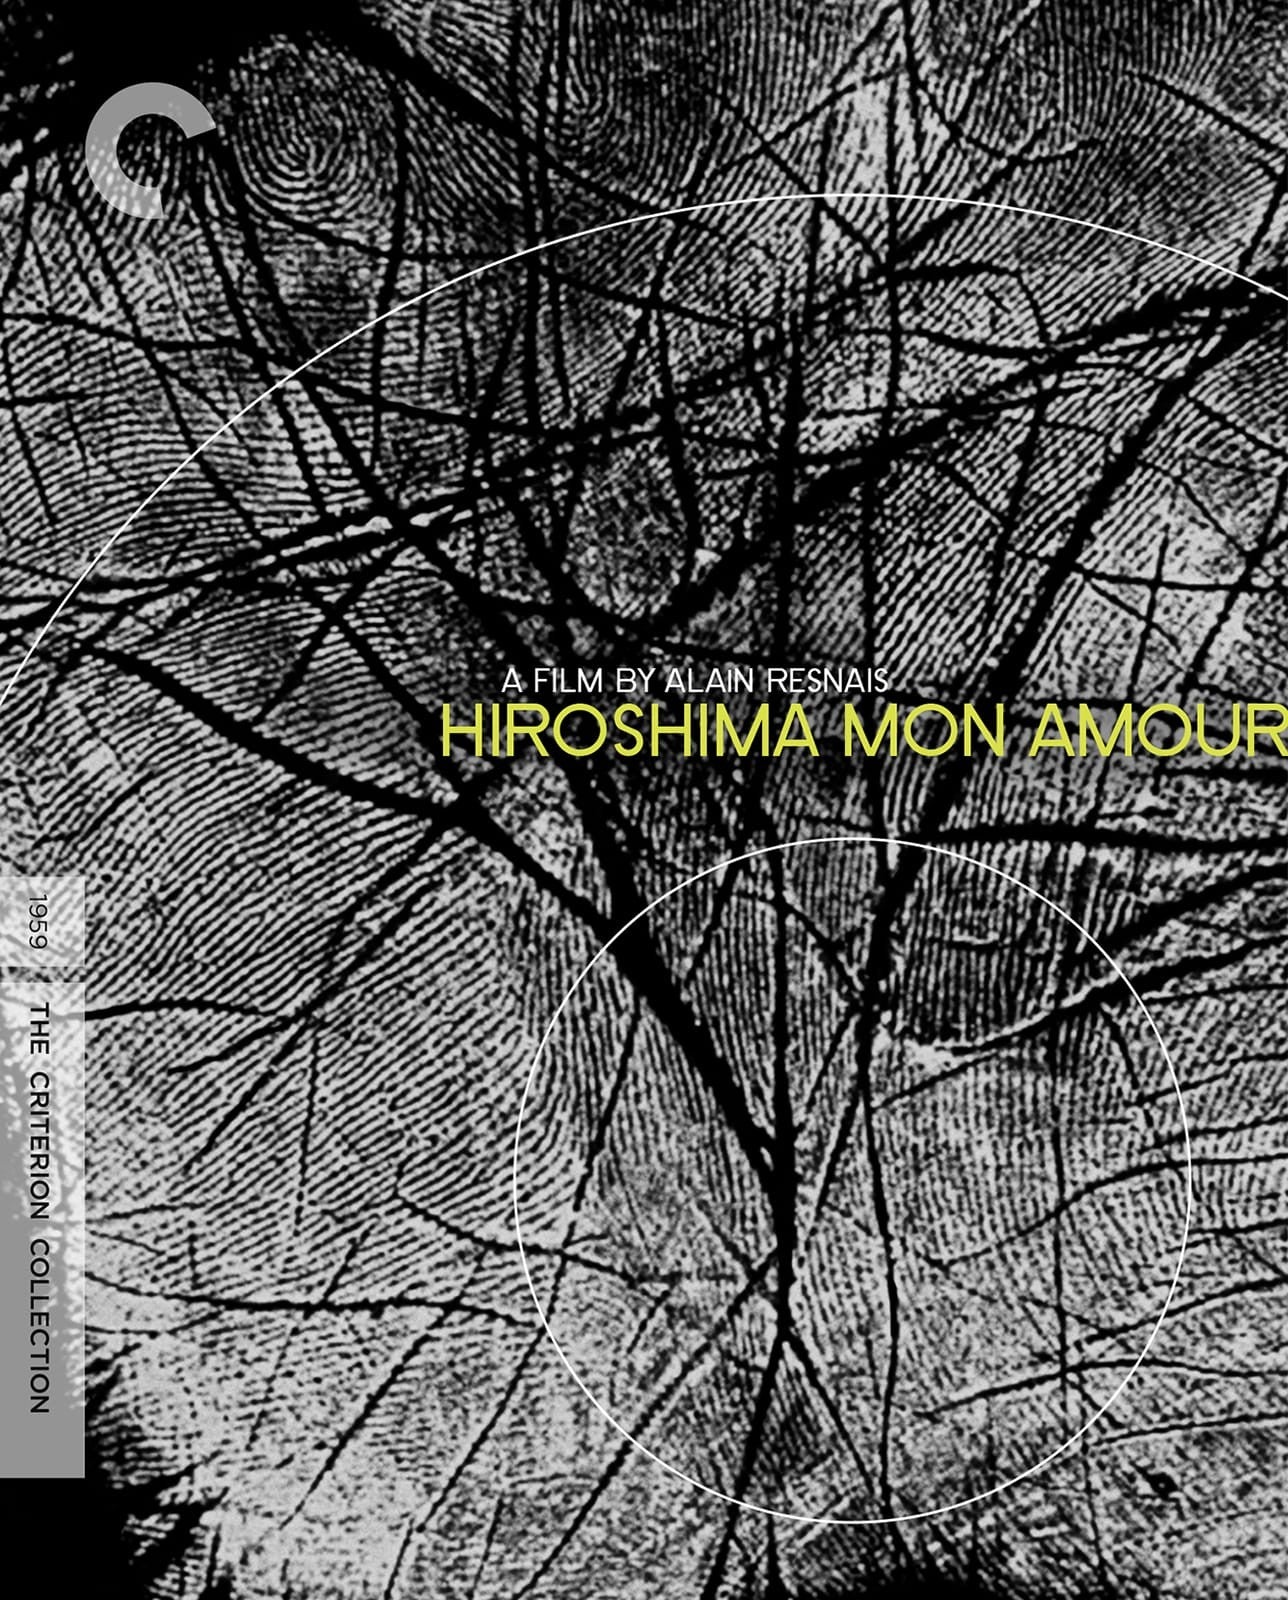 Hiroshima Mon Amour - Criterion Collection (Blu-ray)